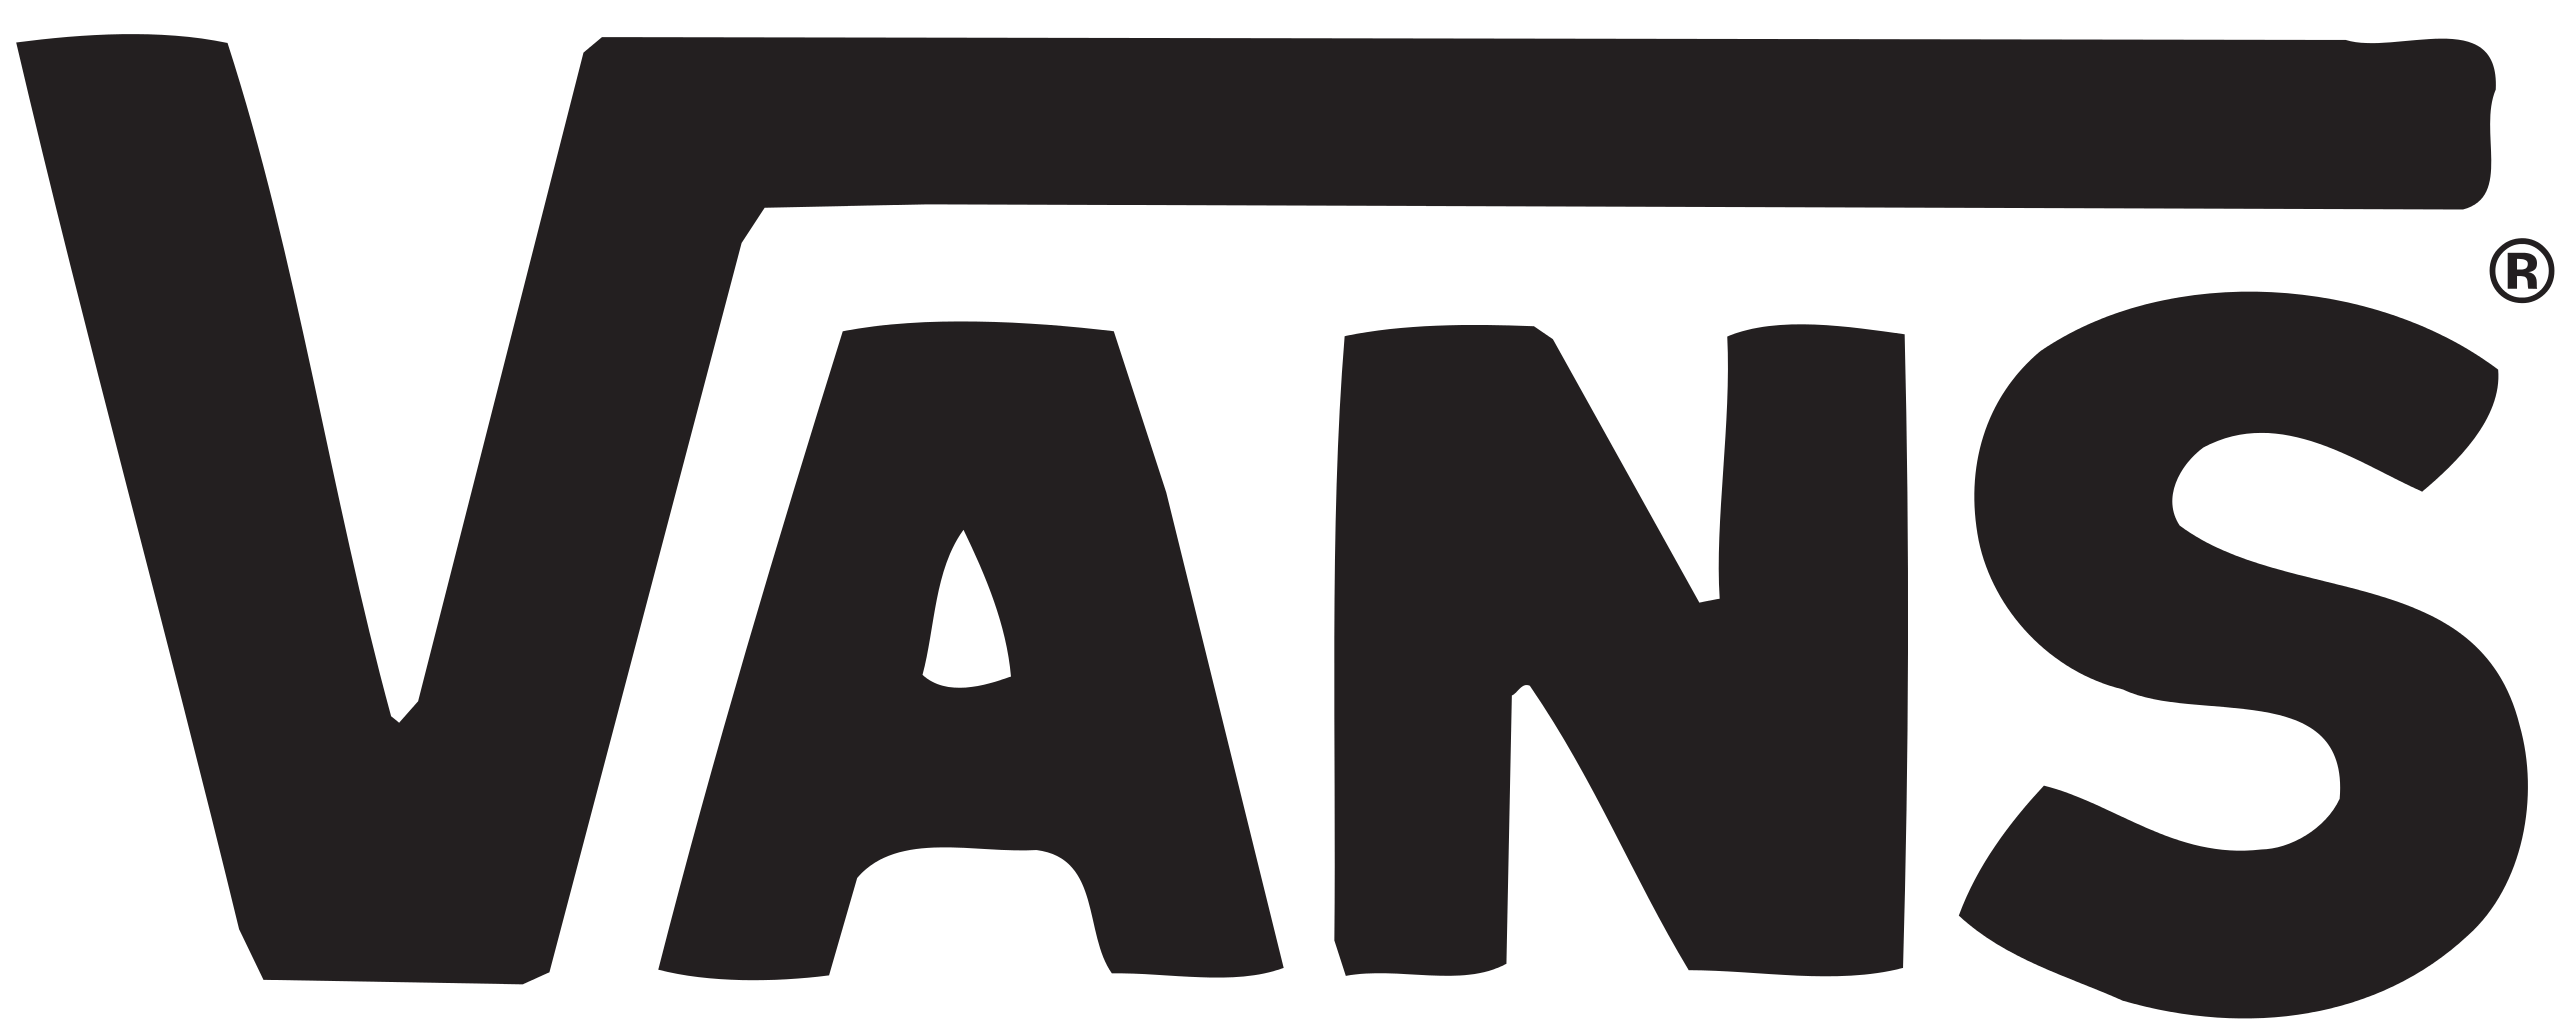 Vans-Logo-min